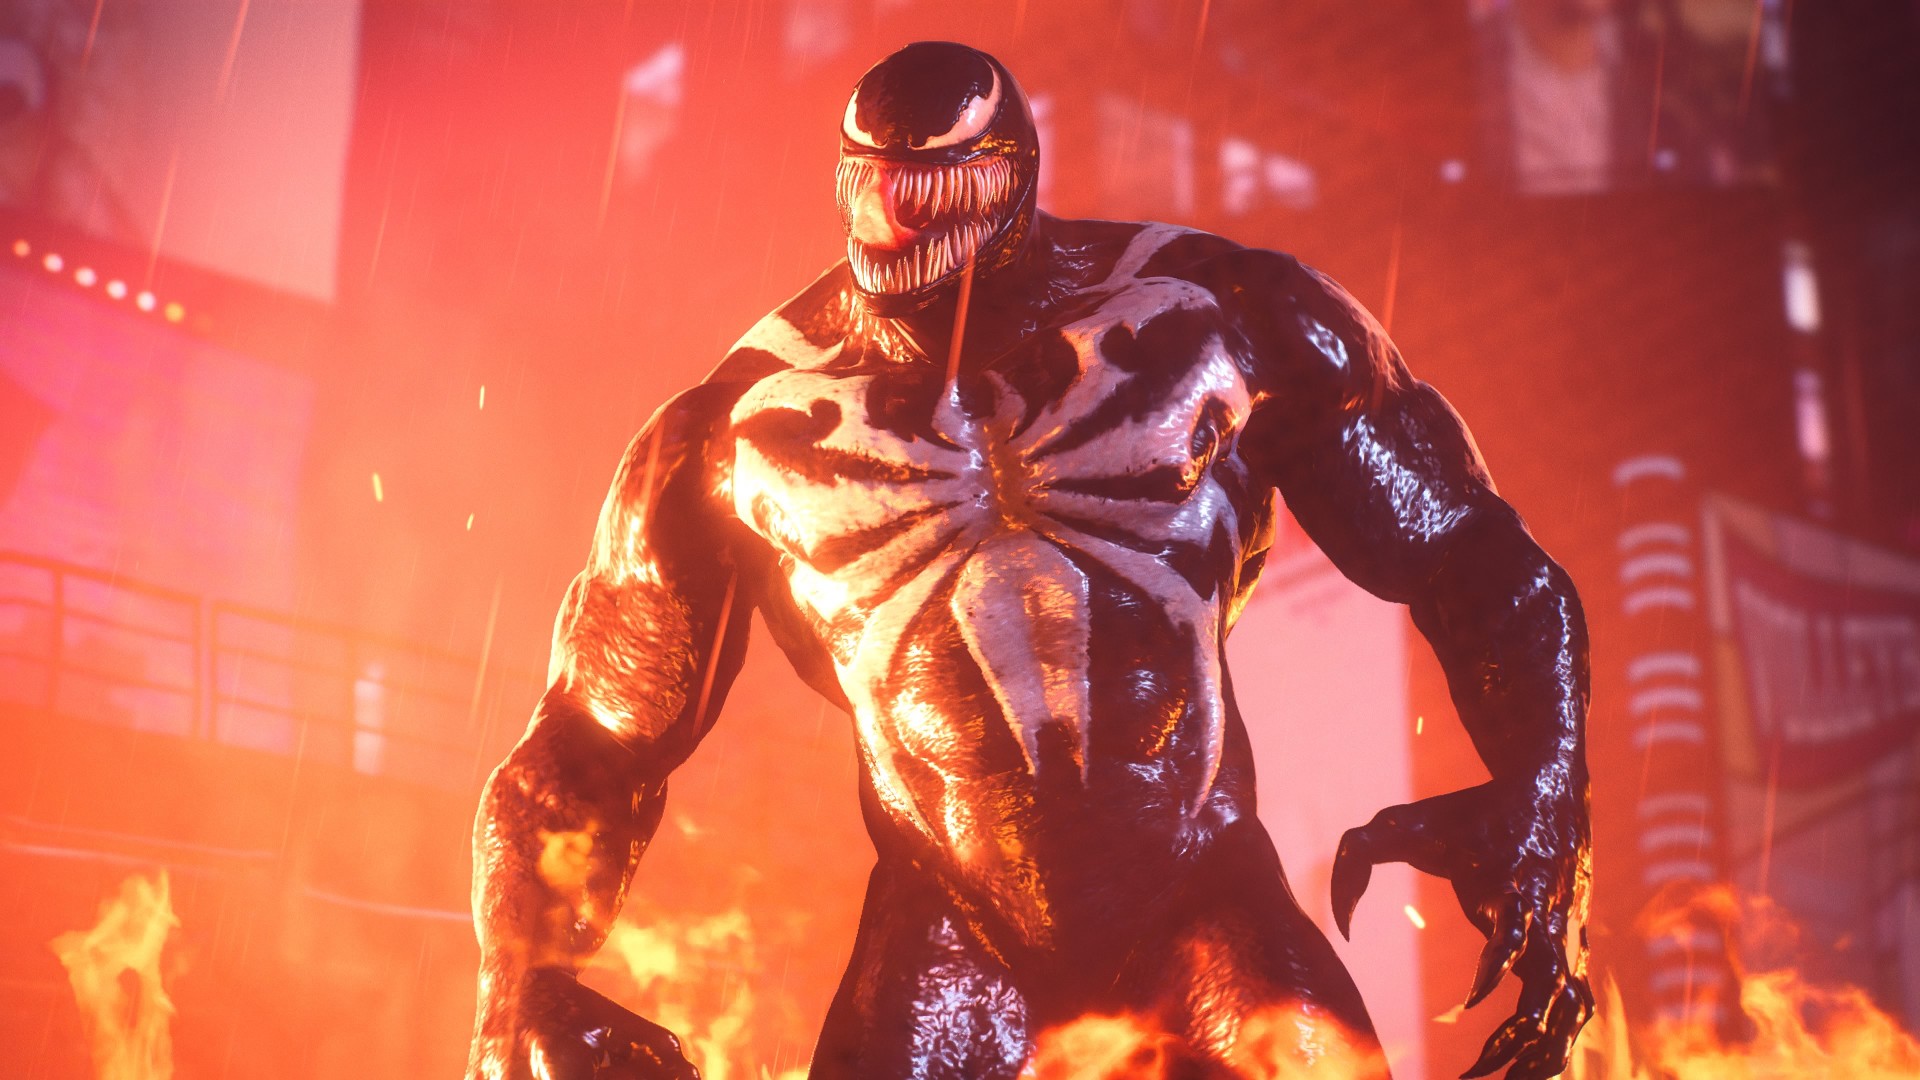 Web-Slinging surprise! Spider-Man: Across the Spider-Verse teases Venom